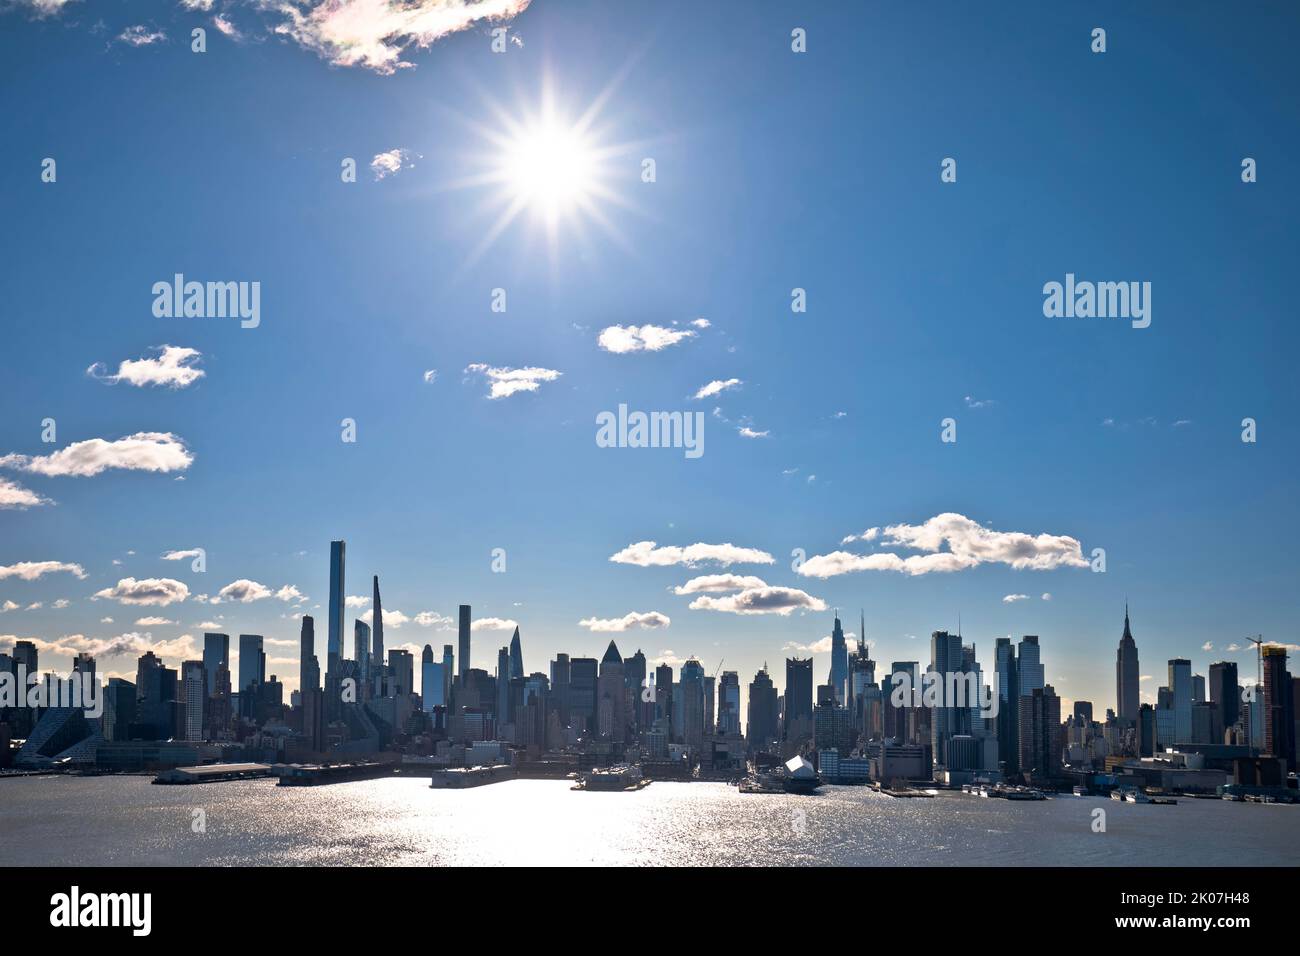 New York City epic skyline under bright sky view, United States of America Stock Photo